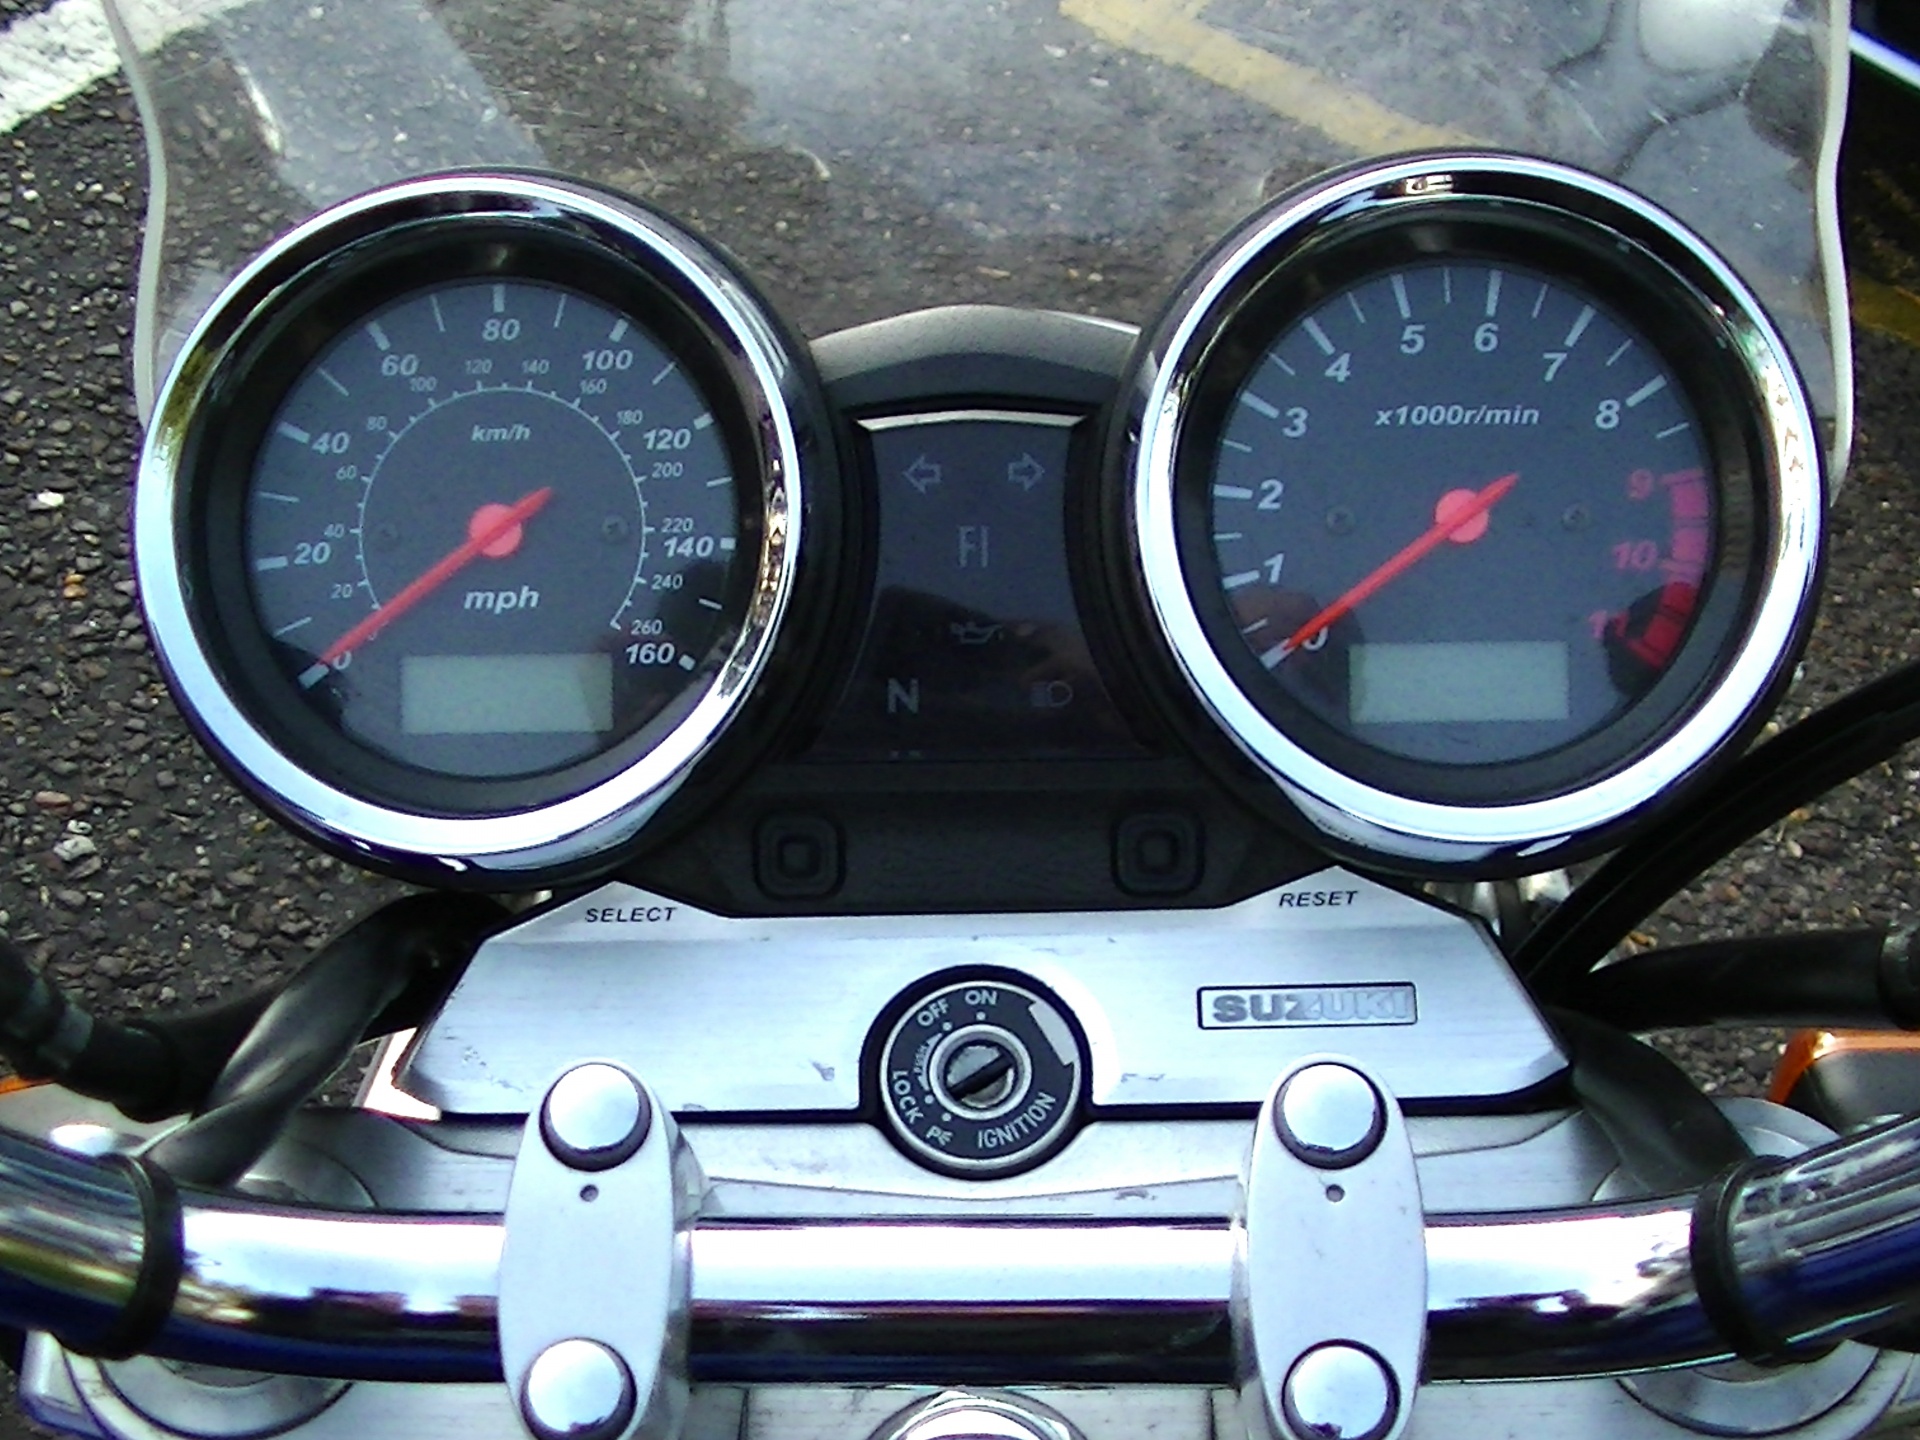 Motociklai,  Suzuki,  1400,  Spidometras,  Spidometrai,  Speedo,  Odometras,  Odometrai,  Rev,  Revs